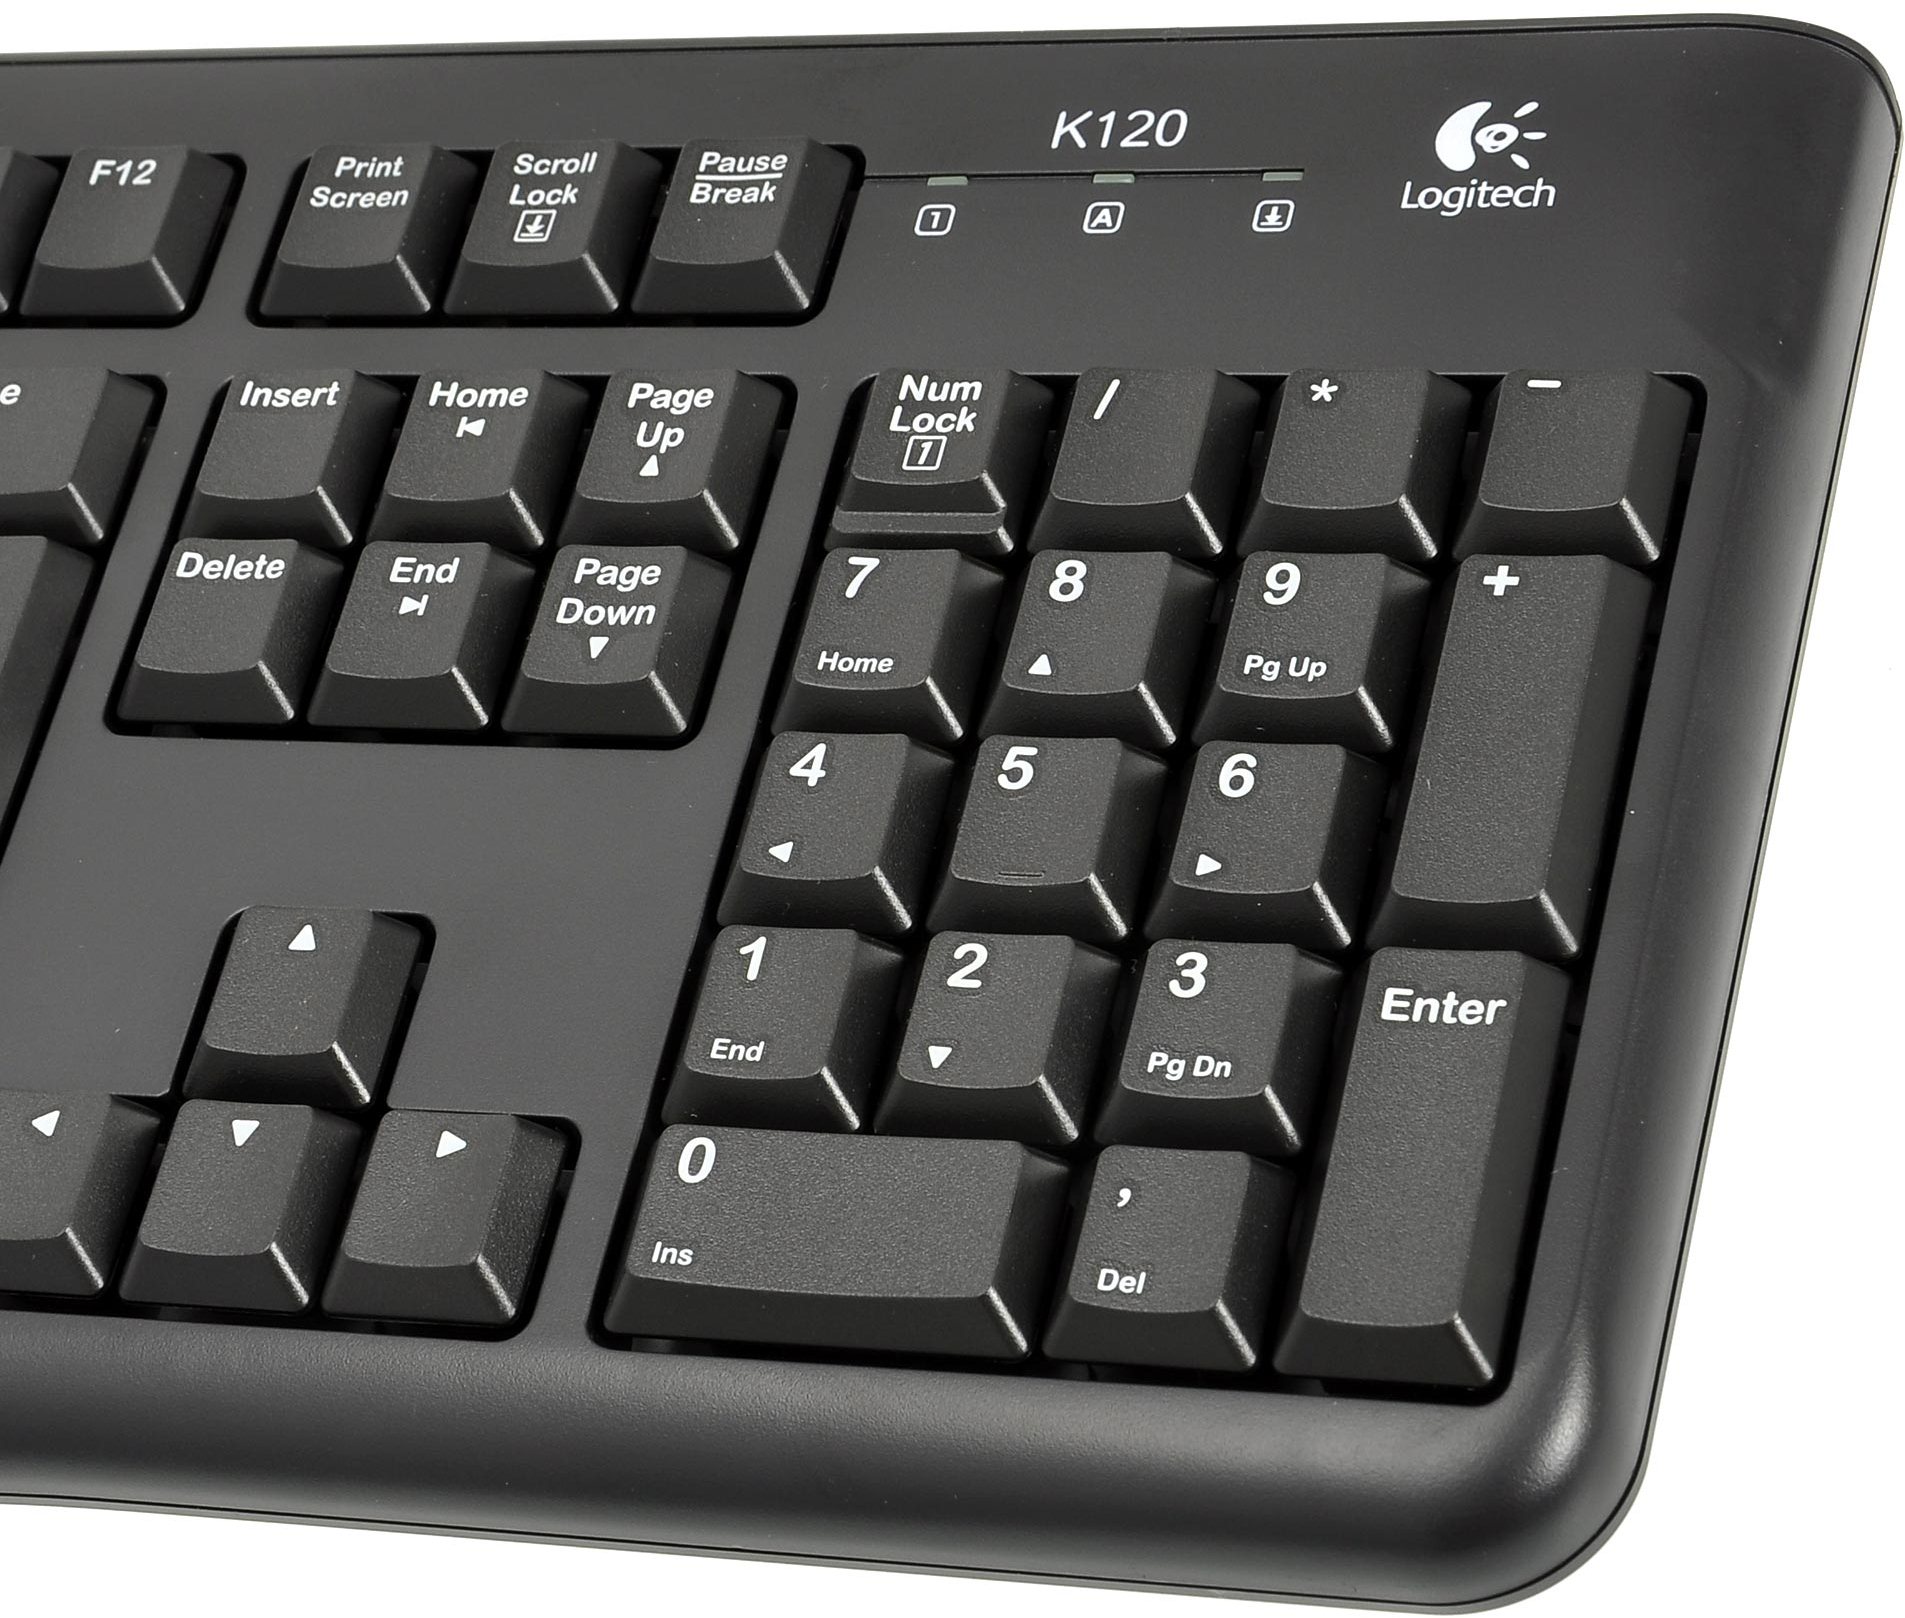 Что такое scroll lock на клавиатуре. Клавиатура к120 Logitech. Клавиатура Logitech Keyboard k120. Клавиатура Logitech Classic k120. Logitech k120 OEM.